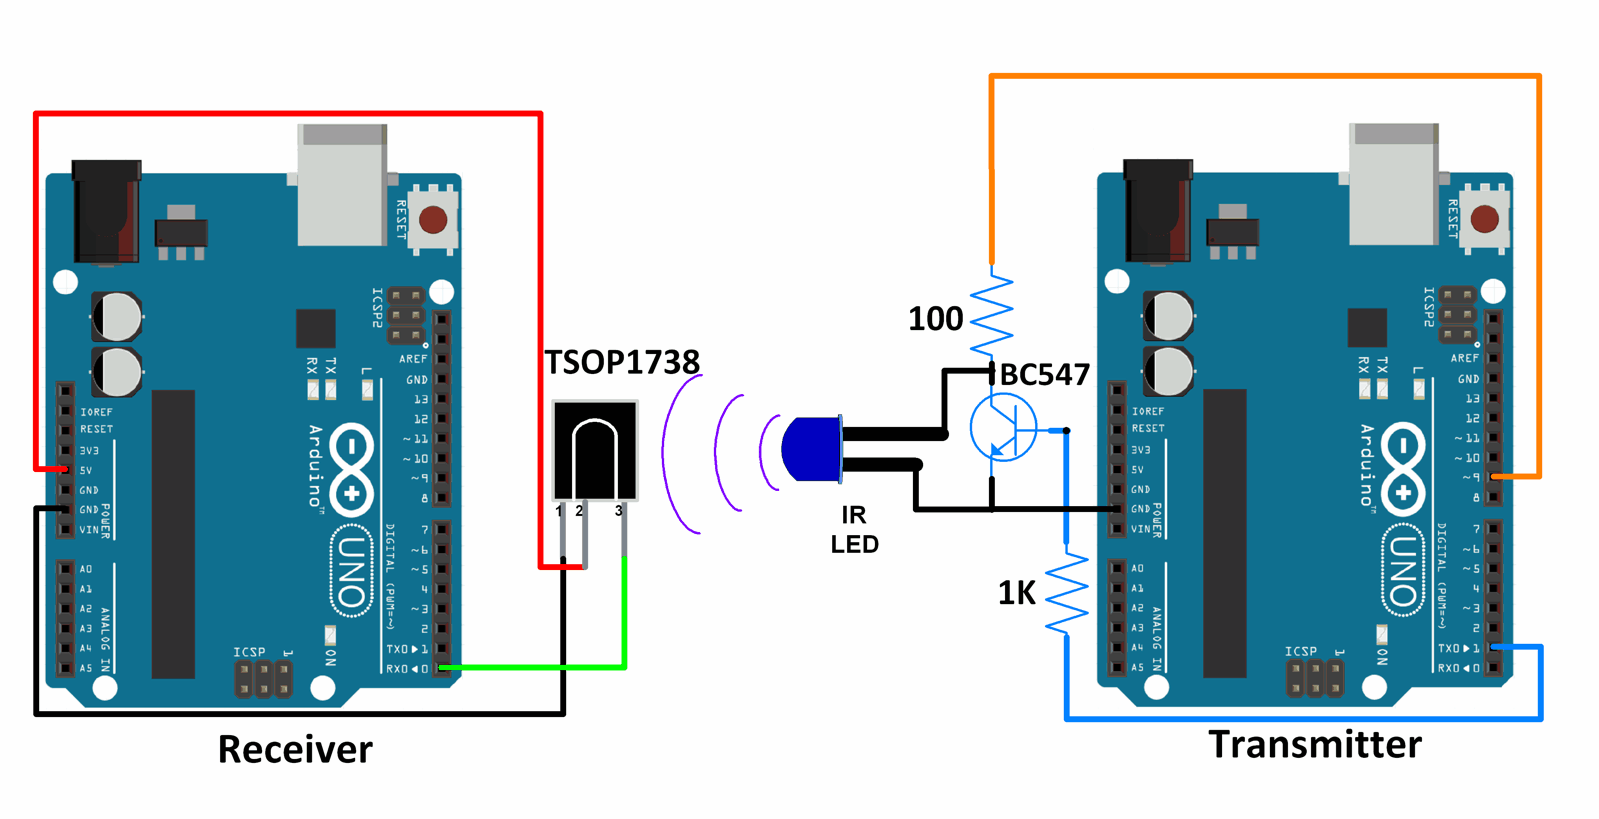 IR Communication Between IR LED And TSOP1738 IR Receiver using Arduino